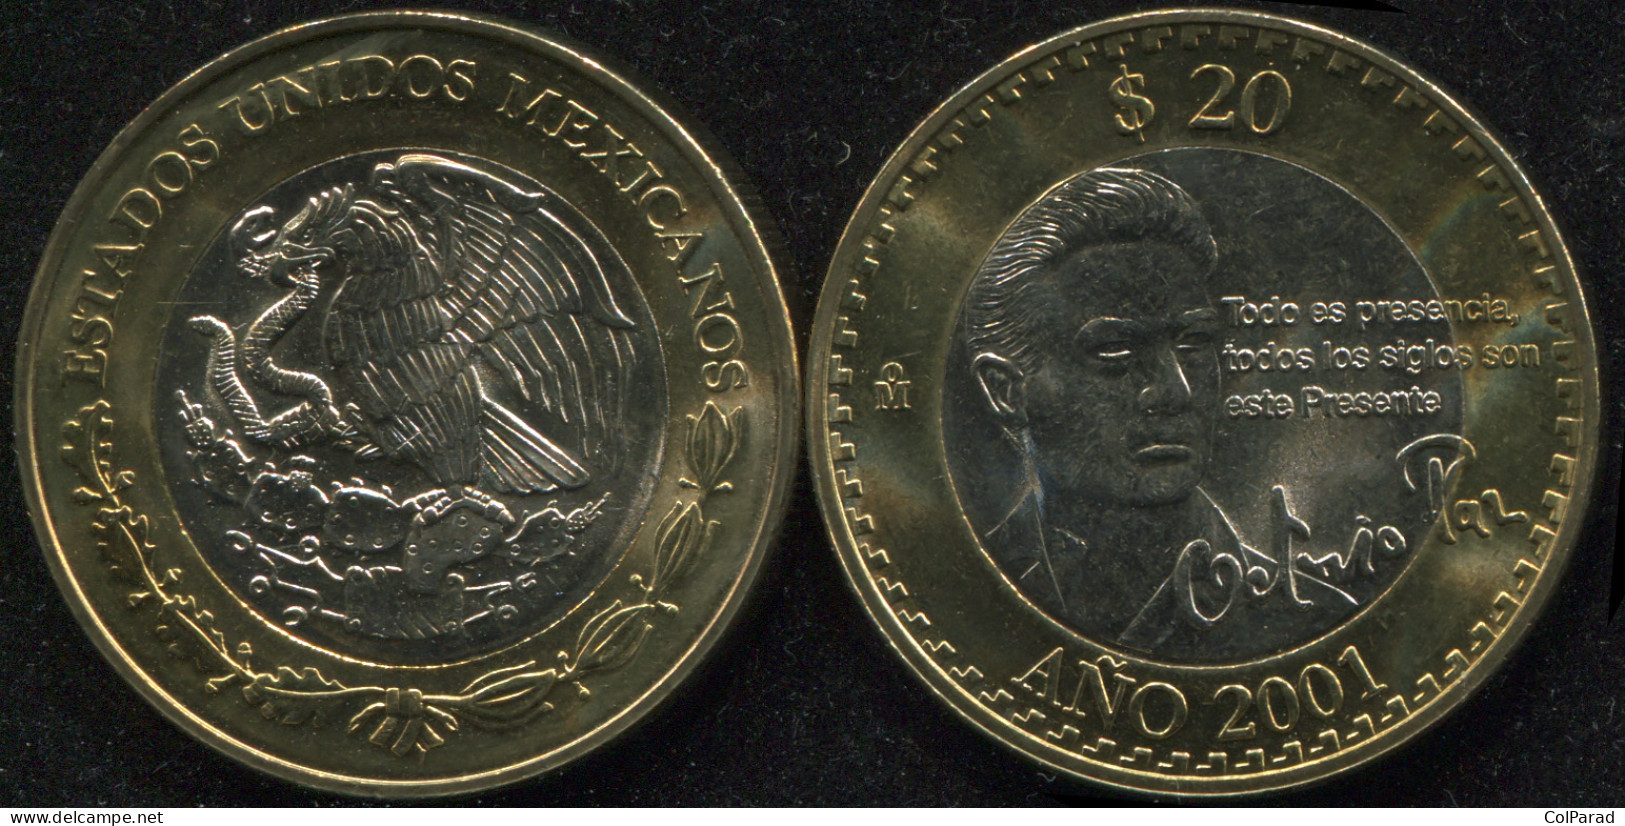 MEXICO COIN 20 PESOS - KM#638 Bi-Metallic Unc - 2001 - Octavio Paz, Poet - Mexico